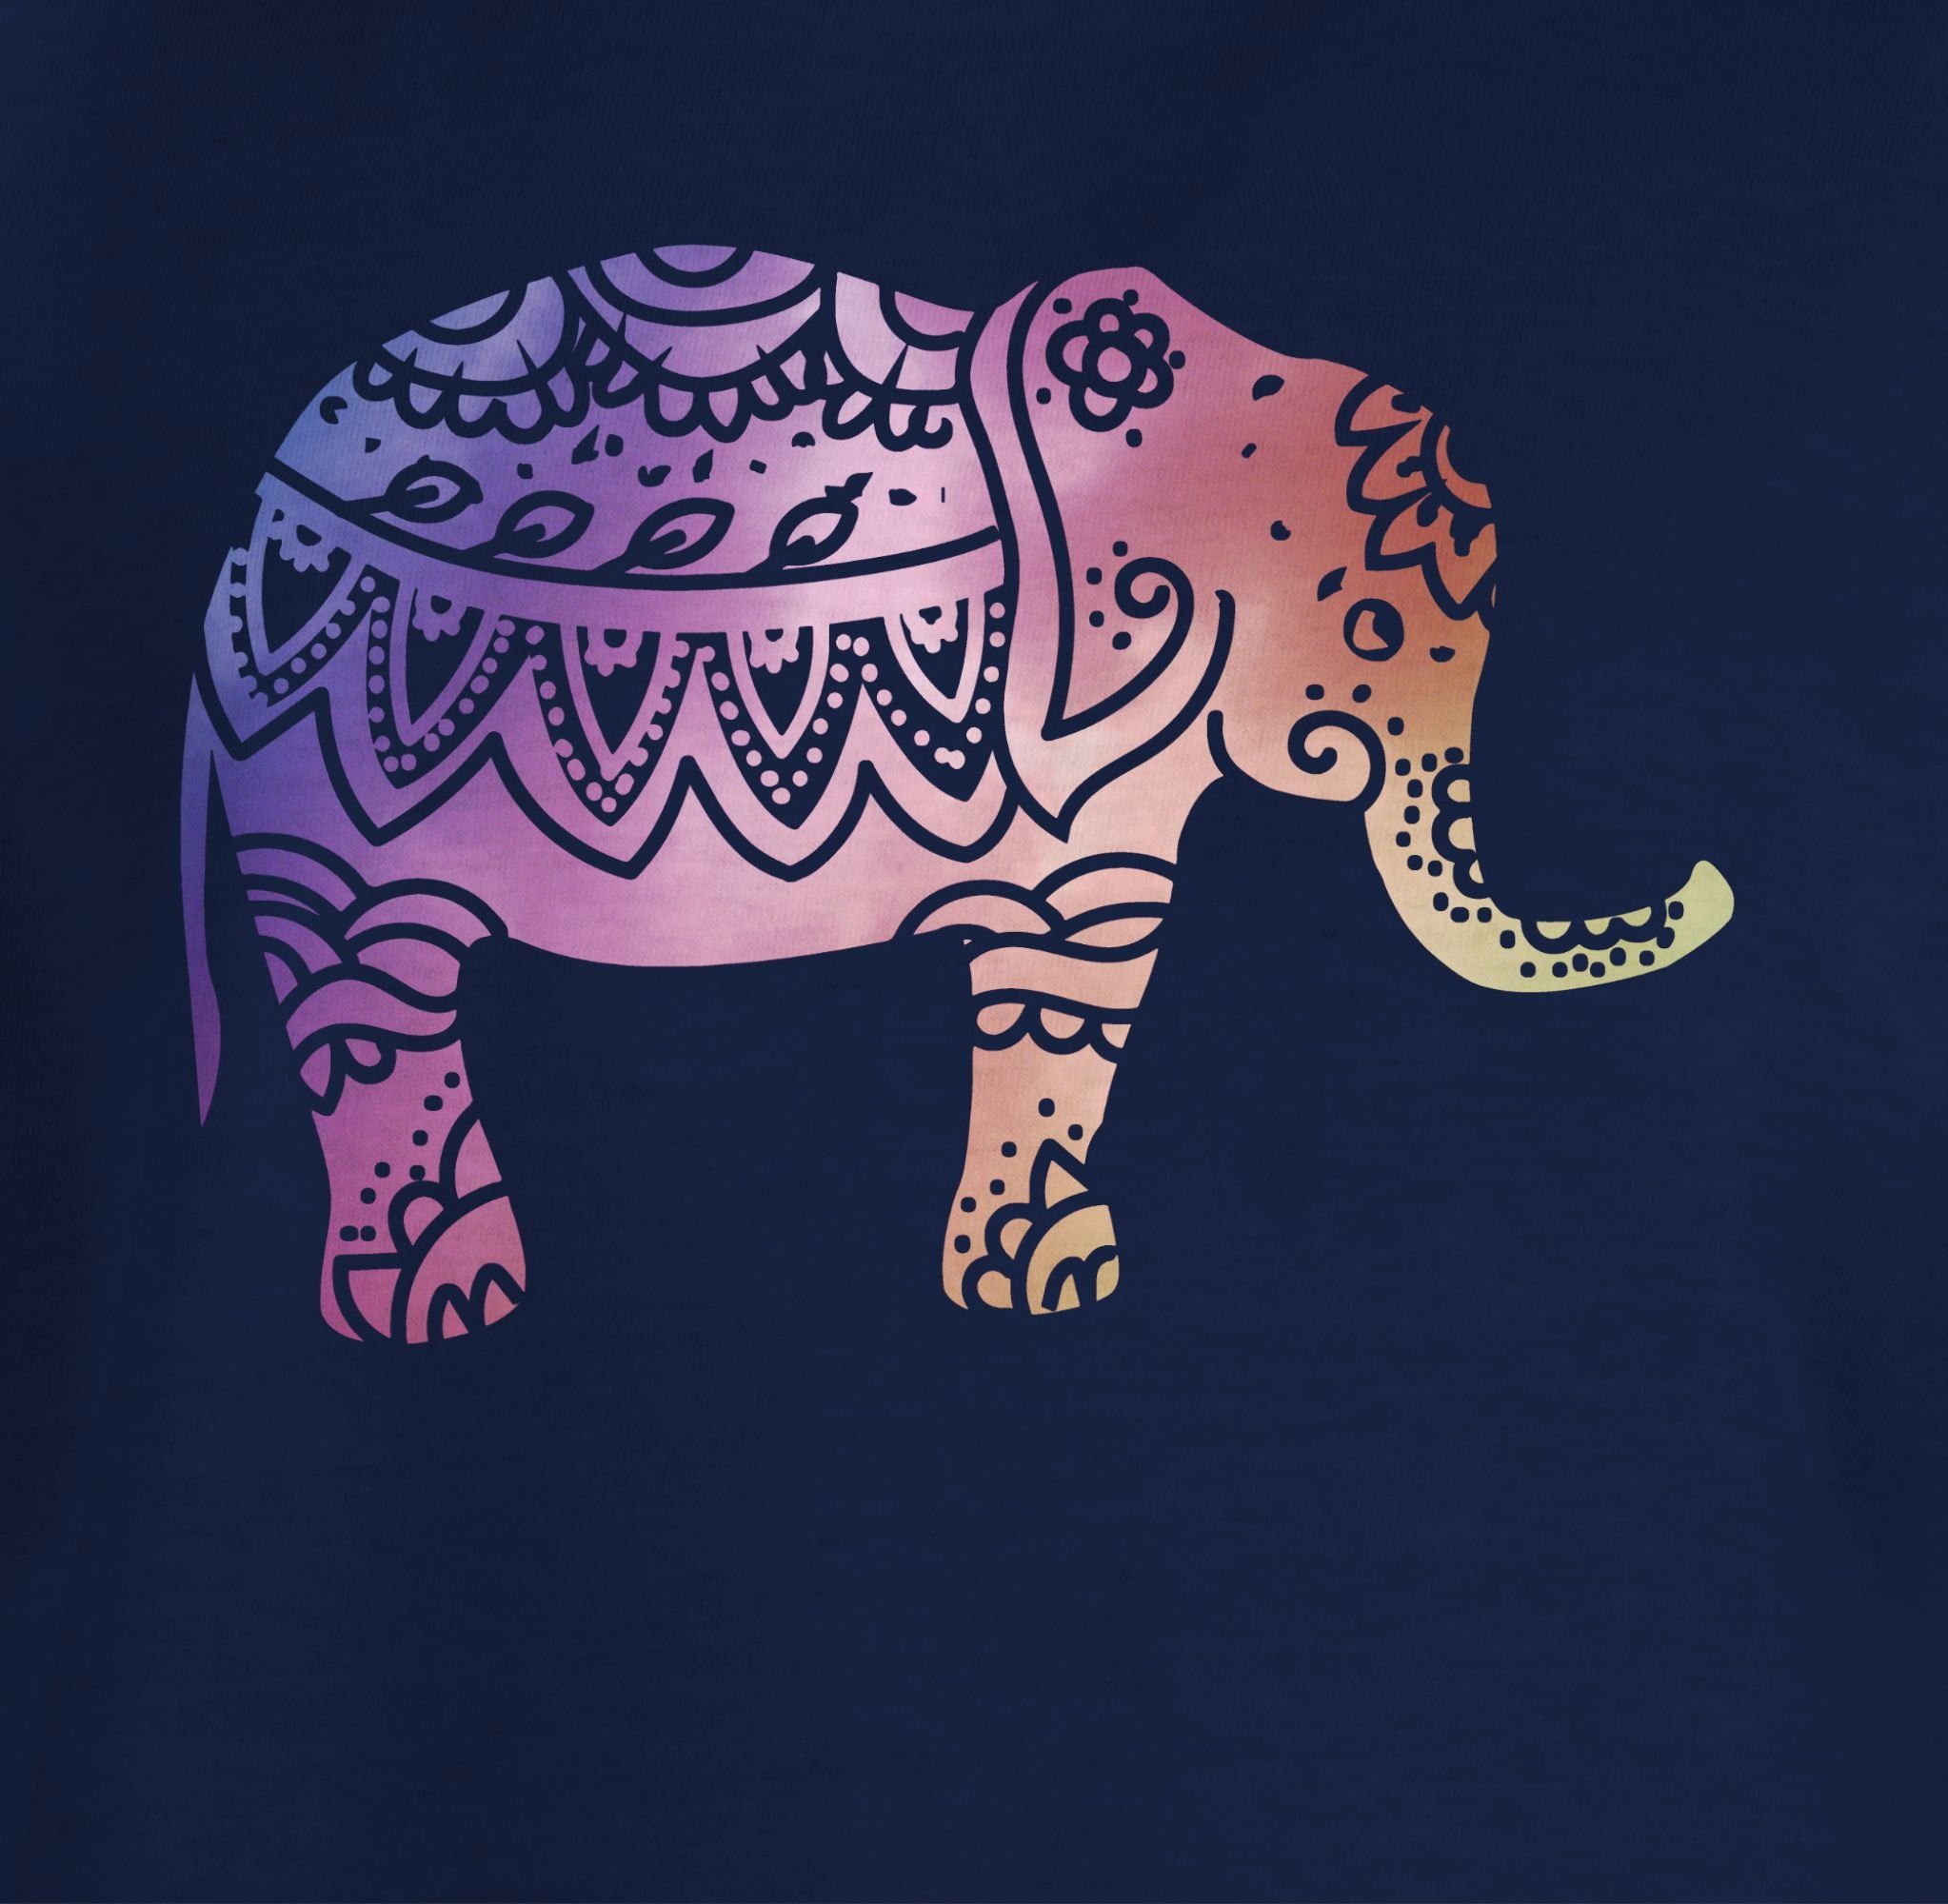 Shirtracer T-Shirt Elefant Namaste Print Tiermotiv 2 Dunkelblau Animal